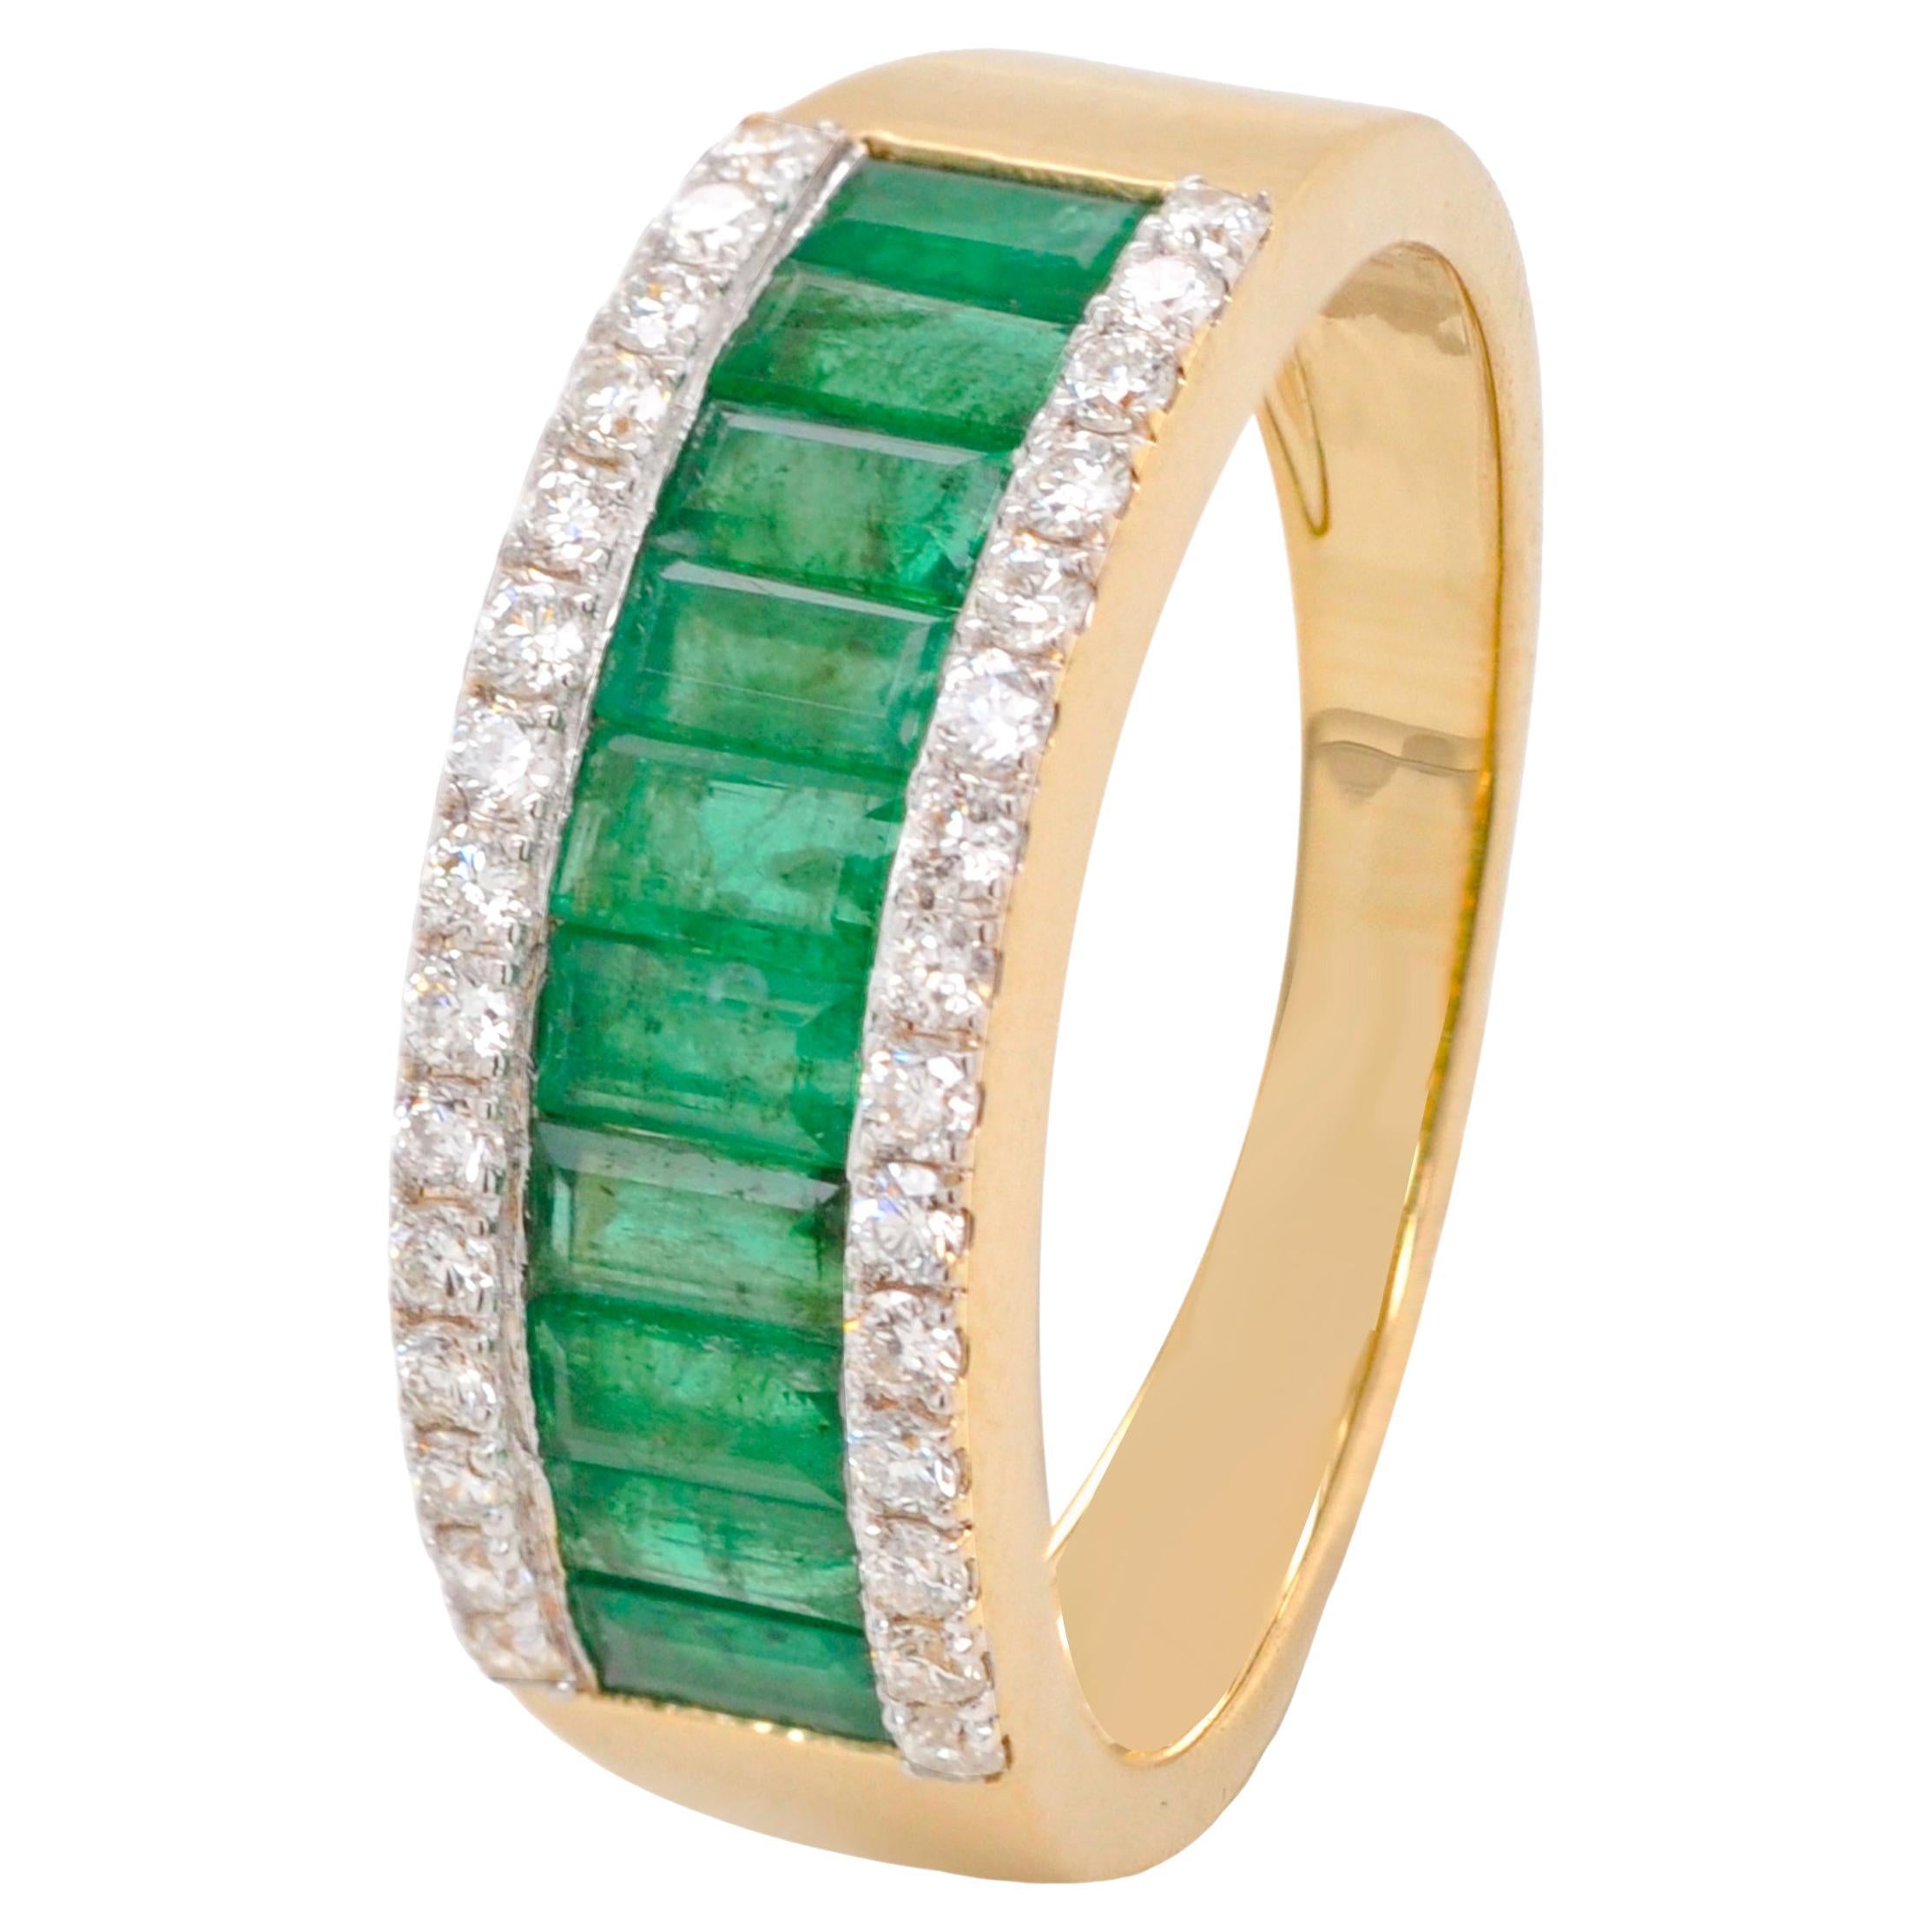 18 Karat Yellow Gold Zambian Emerald Baguette Cut Diamond Band Ring